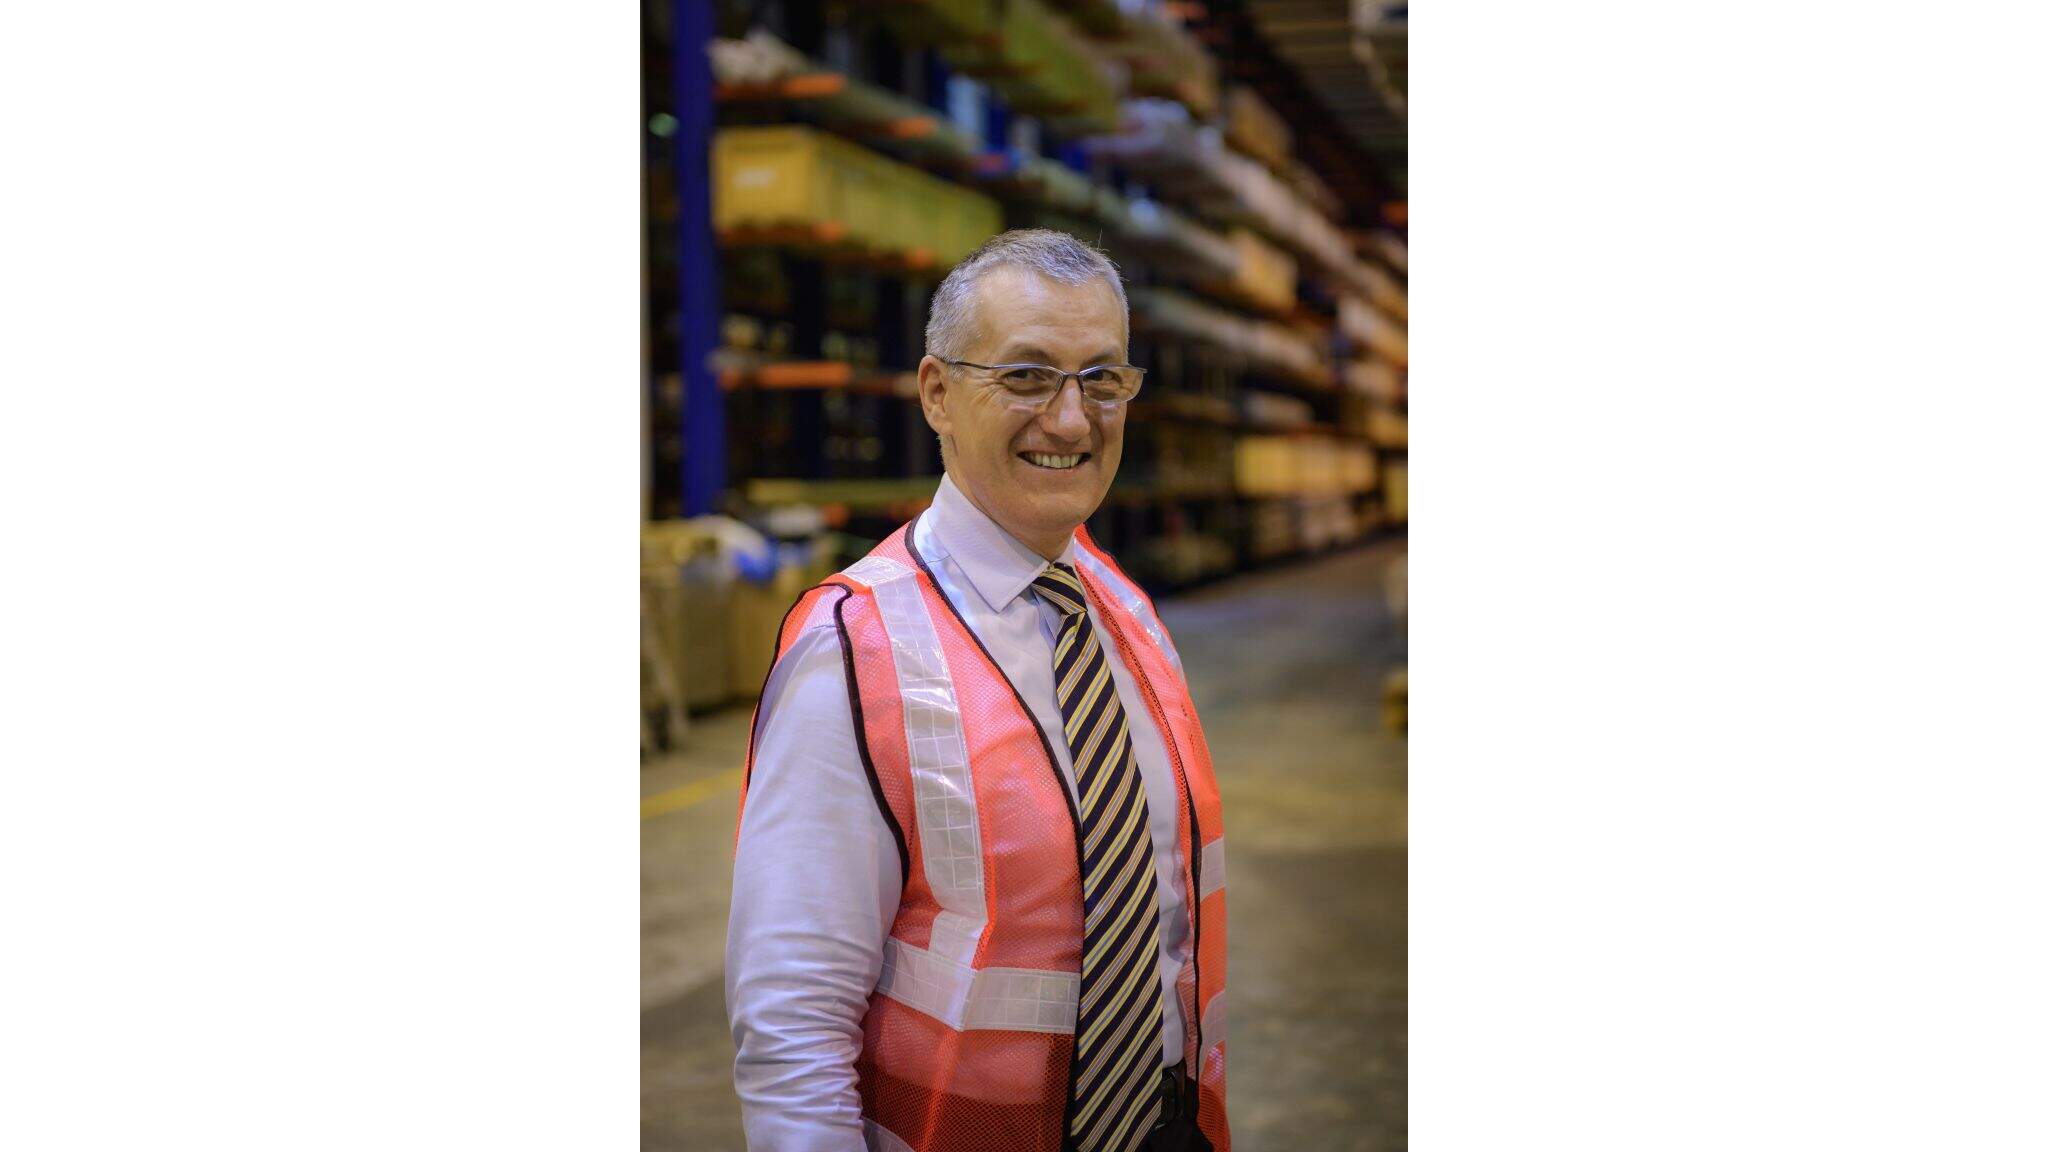 Frank Stadus, Managing Director Air & Sea Logistics Singapore, at DACHSER warehouse.